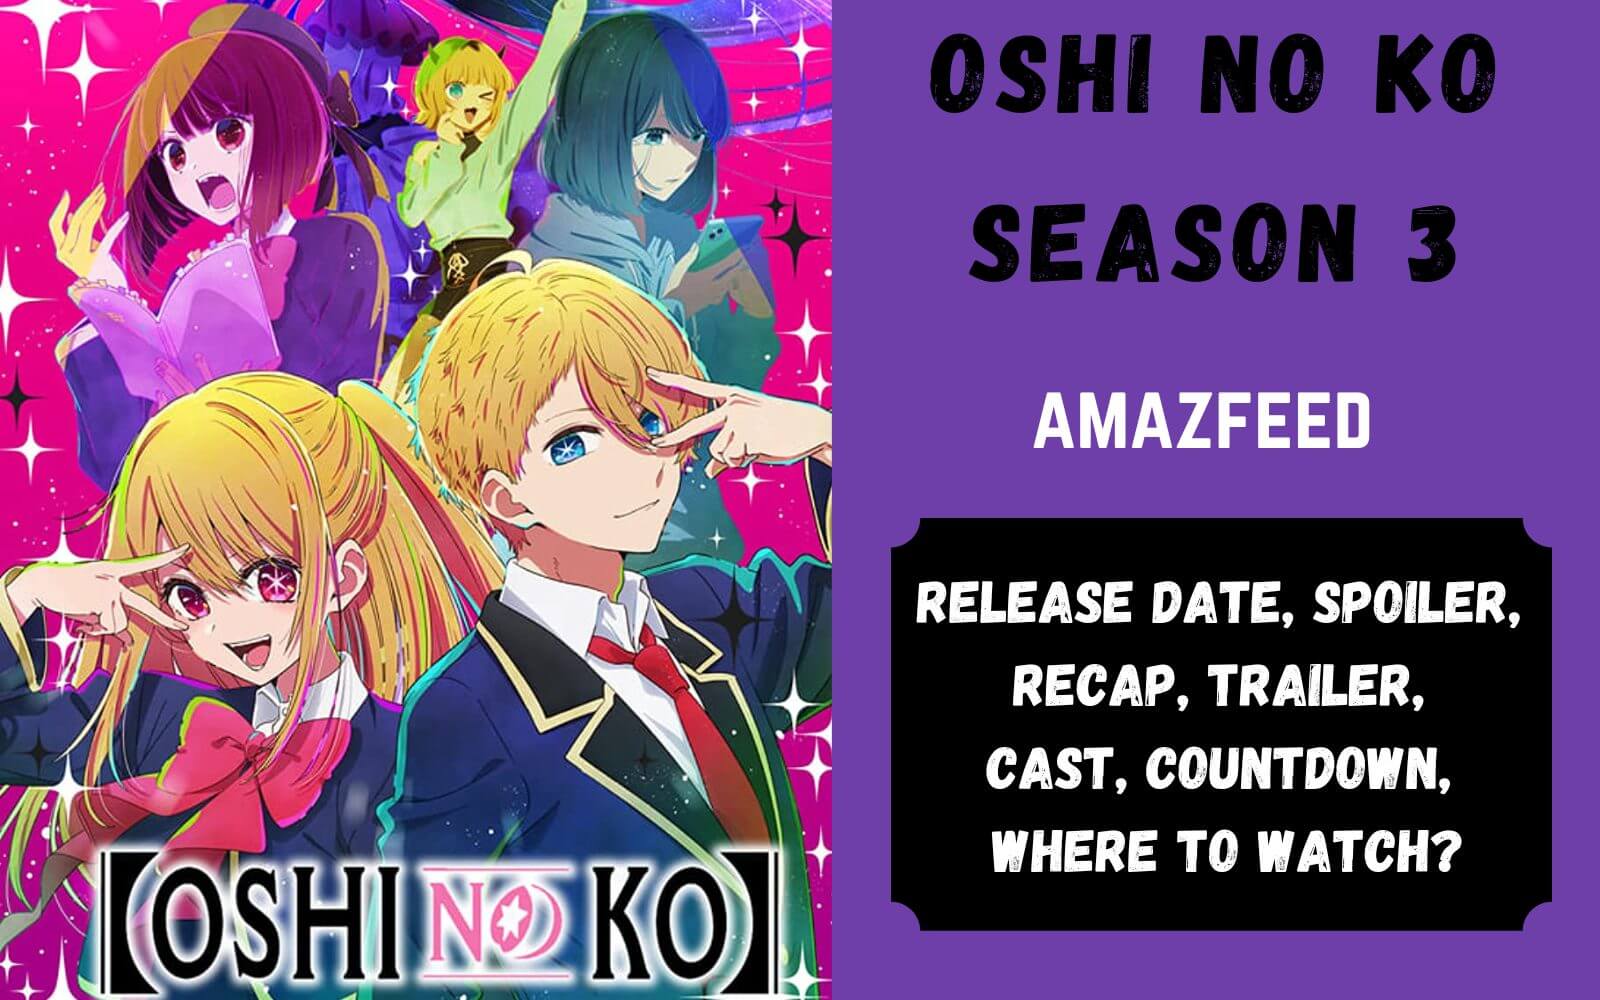 Oshi No Ko anime: Release date, studio details, trailer, plot and more